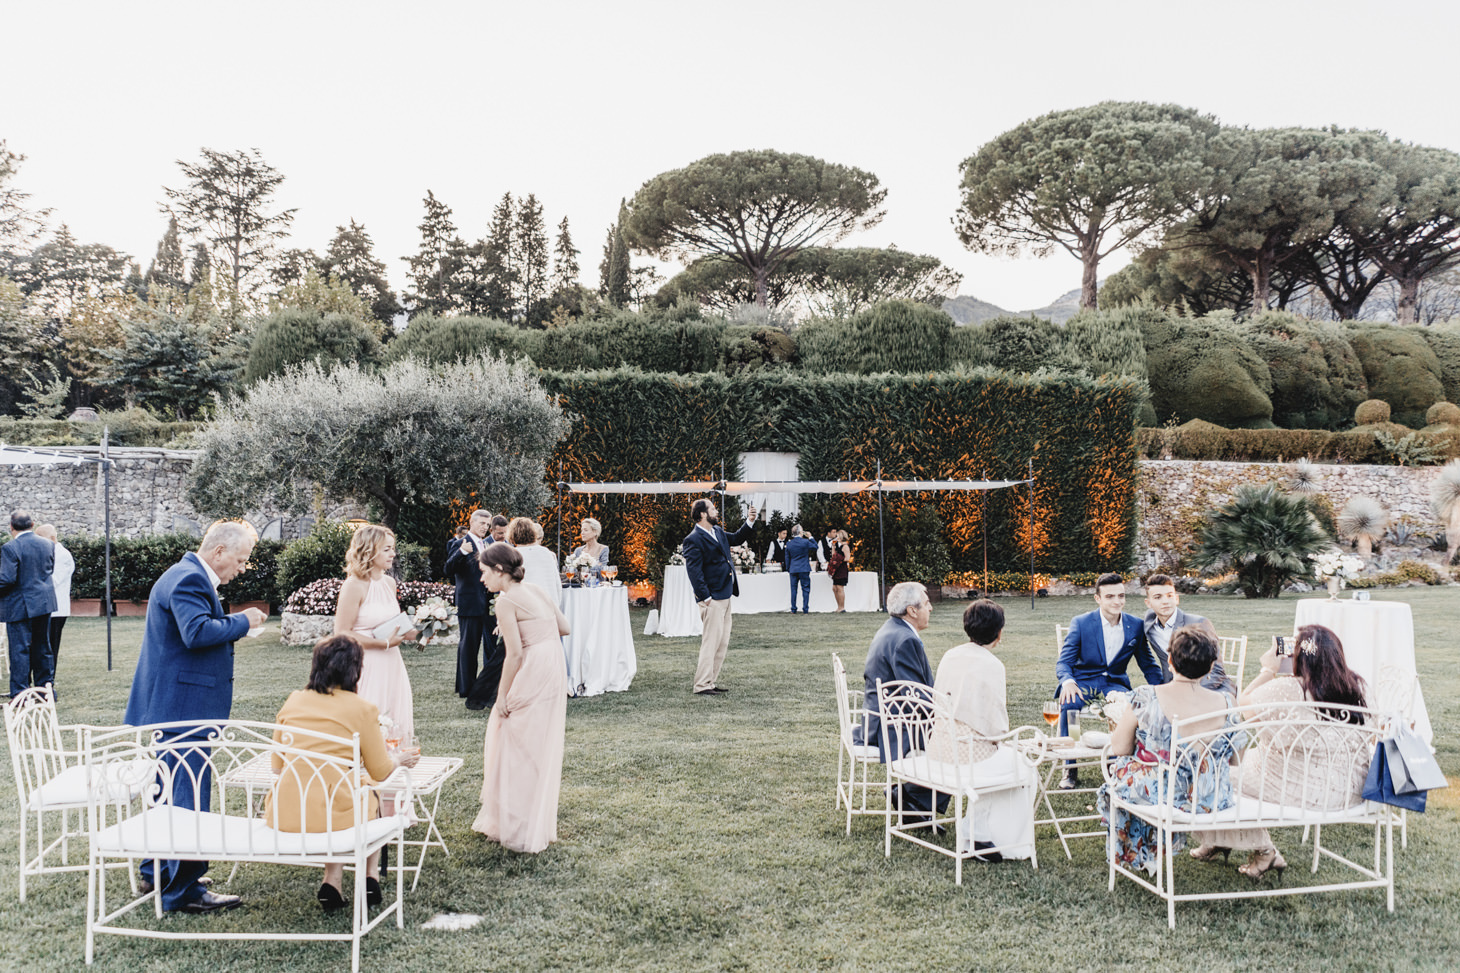 Wedding cocktail in the gardens of Villa Cimbrone